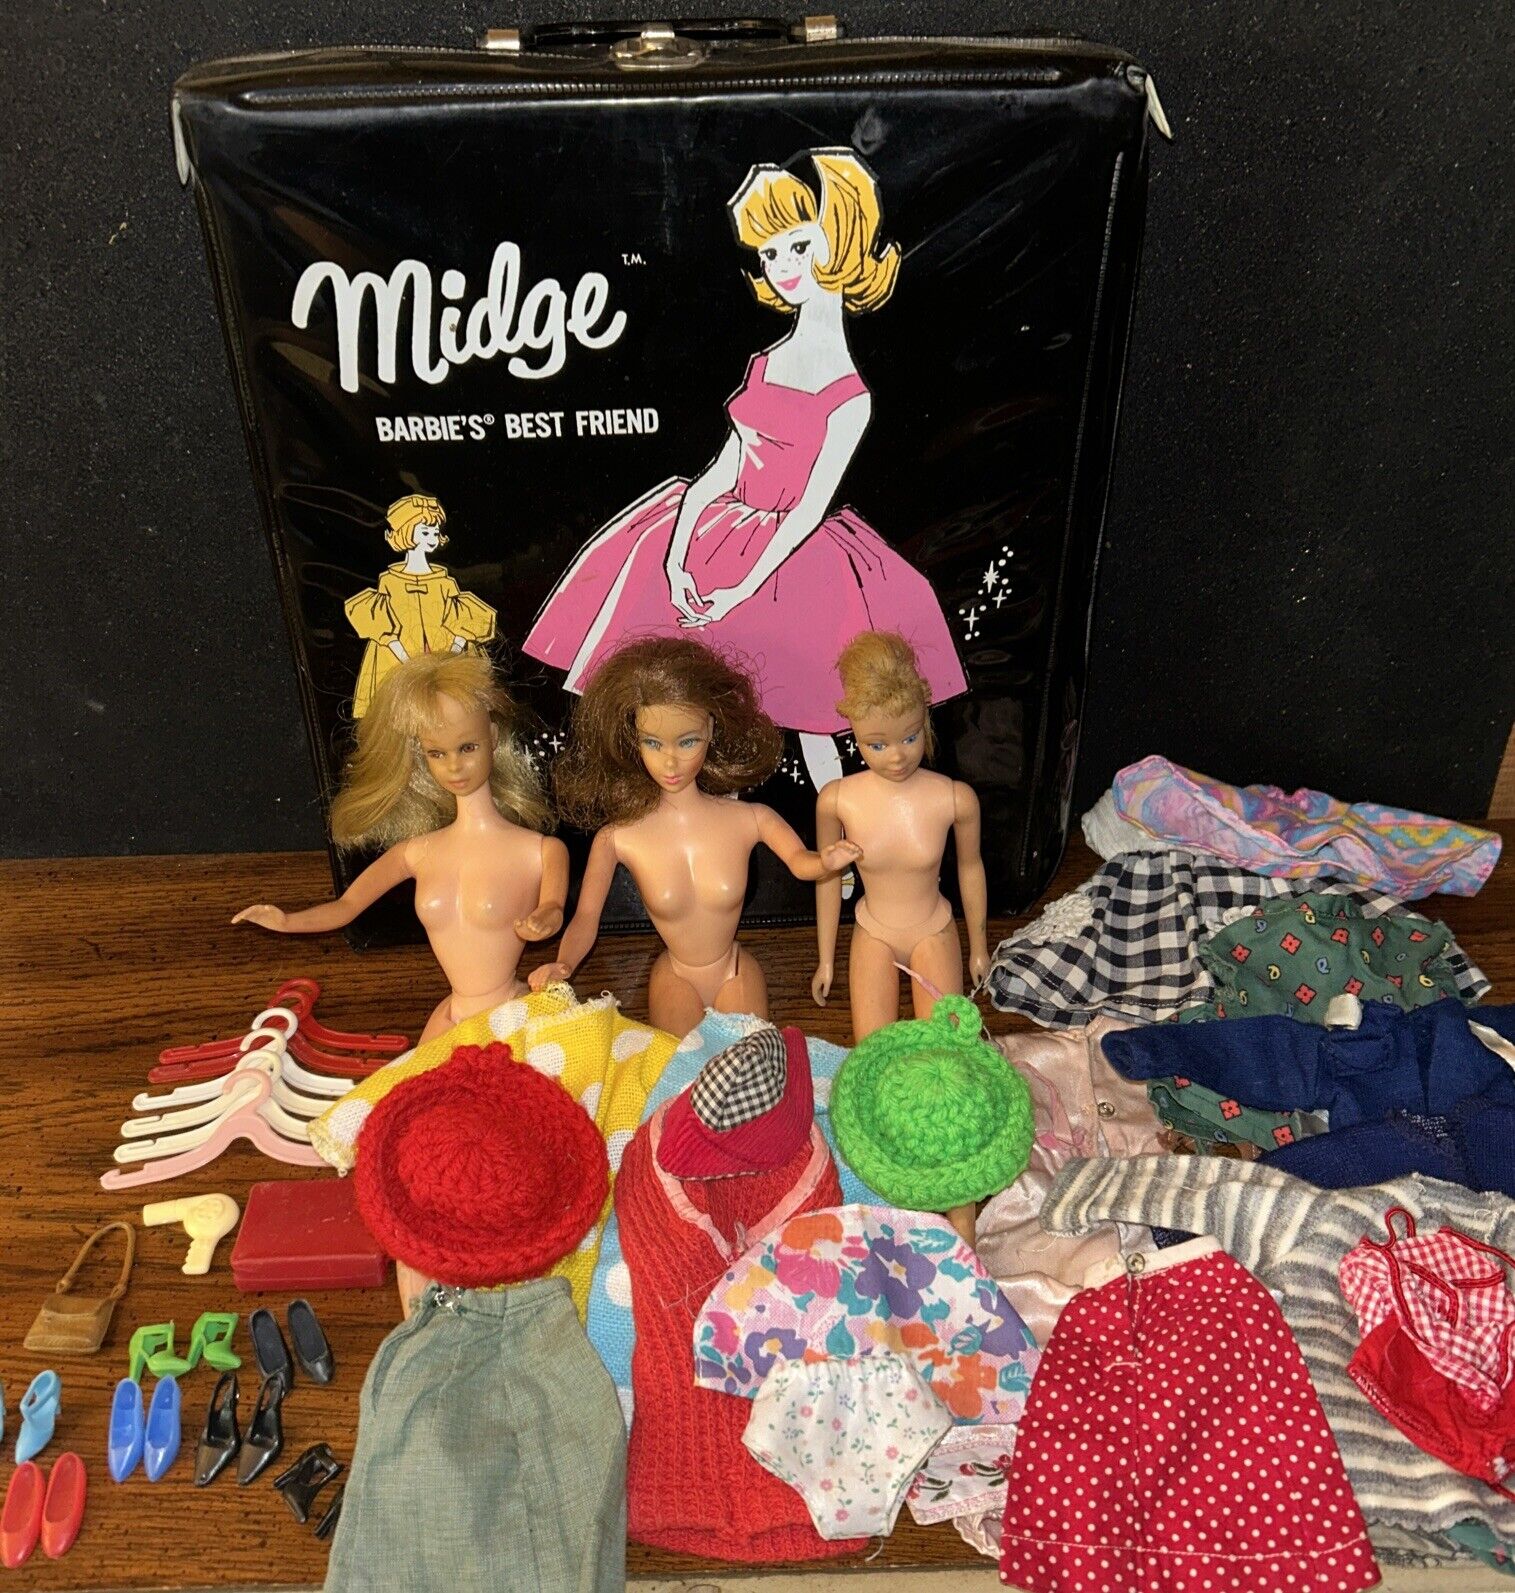 Mattel Barbie 1963 MIDGE Carry Case With 3 1966 Twist/Turn Barbies Accessories